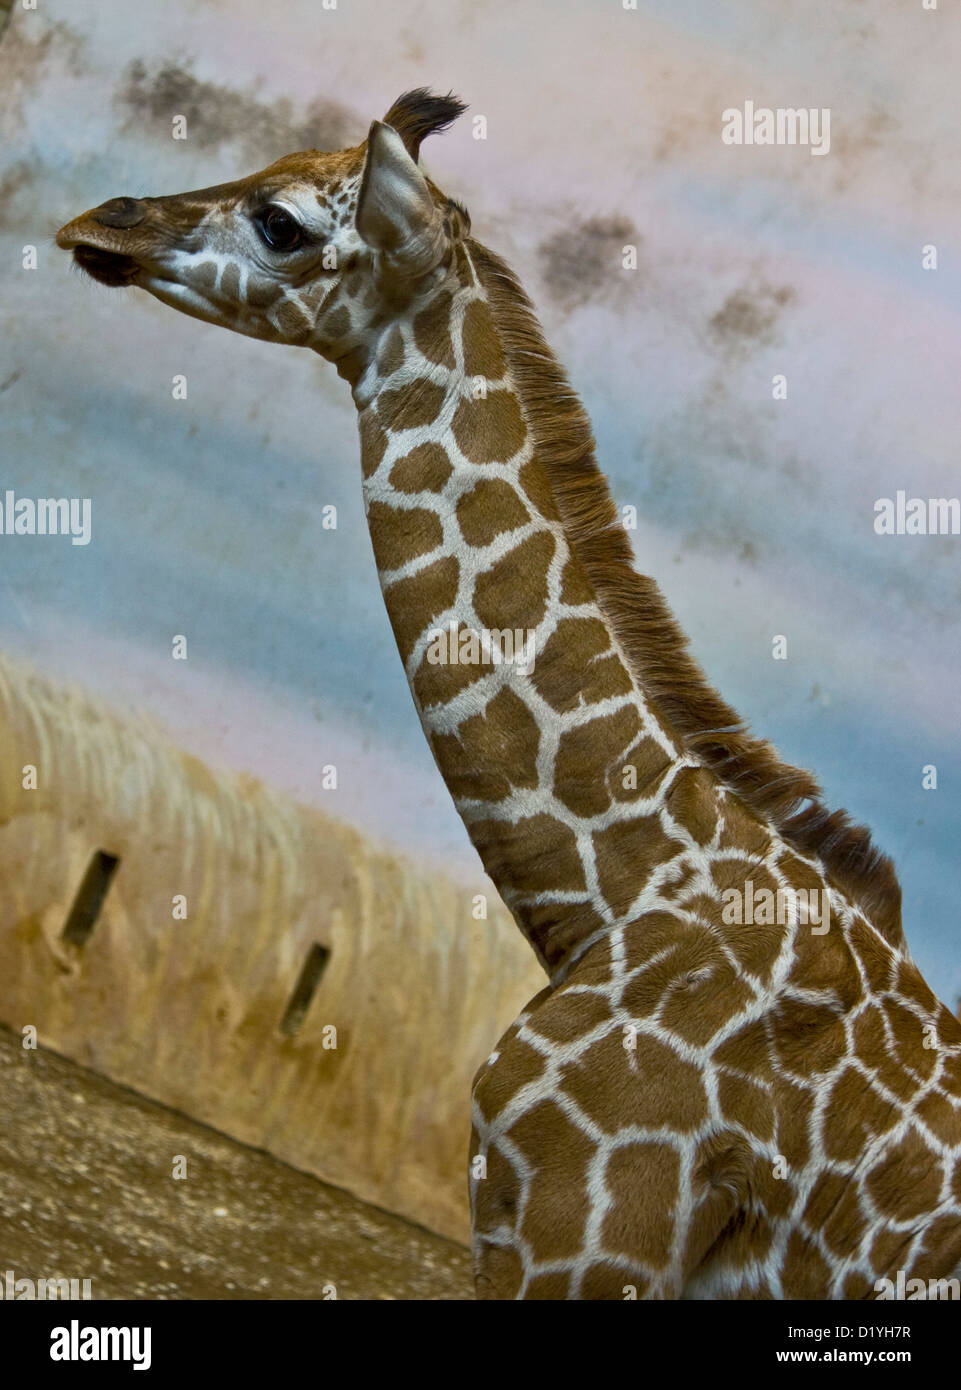 Close-up of cute young baby animal giraffe Stock Photo